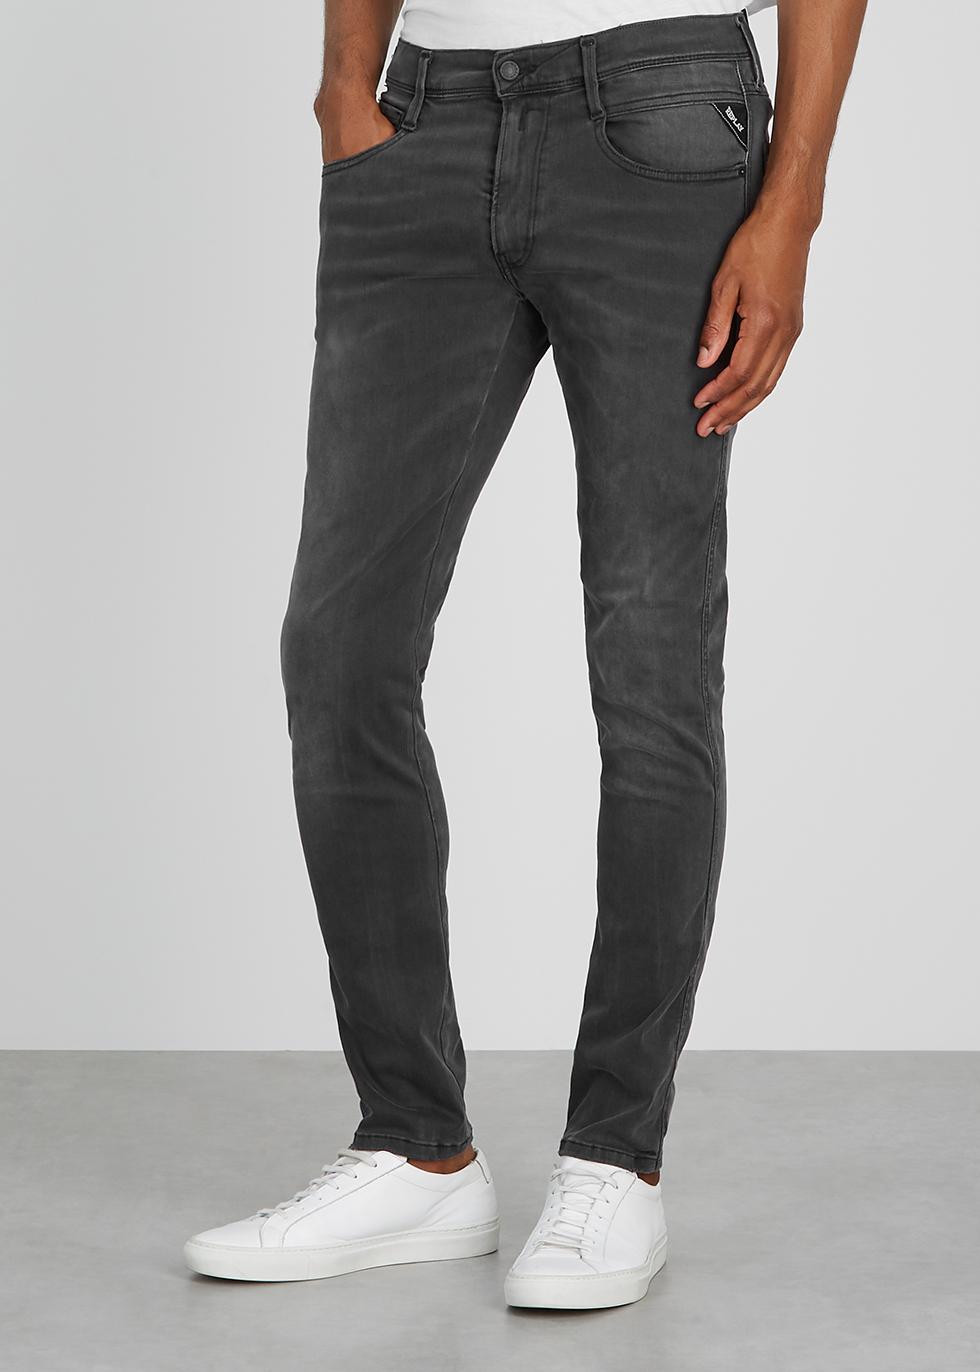 Replay Denim Anbass Hyperflex Grey Slim-leg Jeans in Gray for Men - Lyst